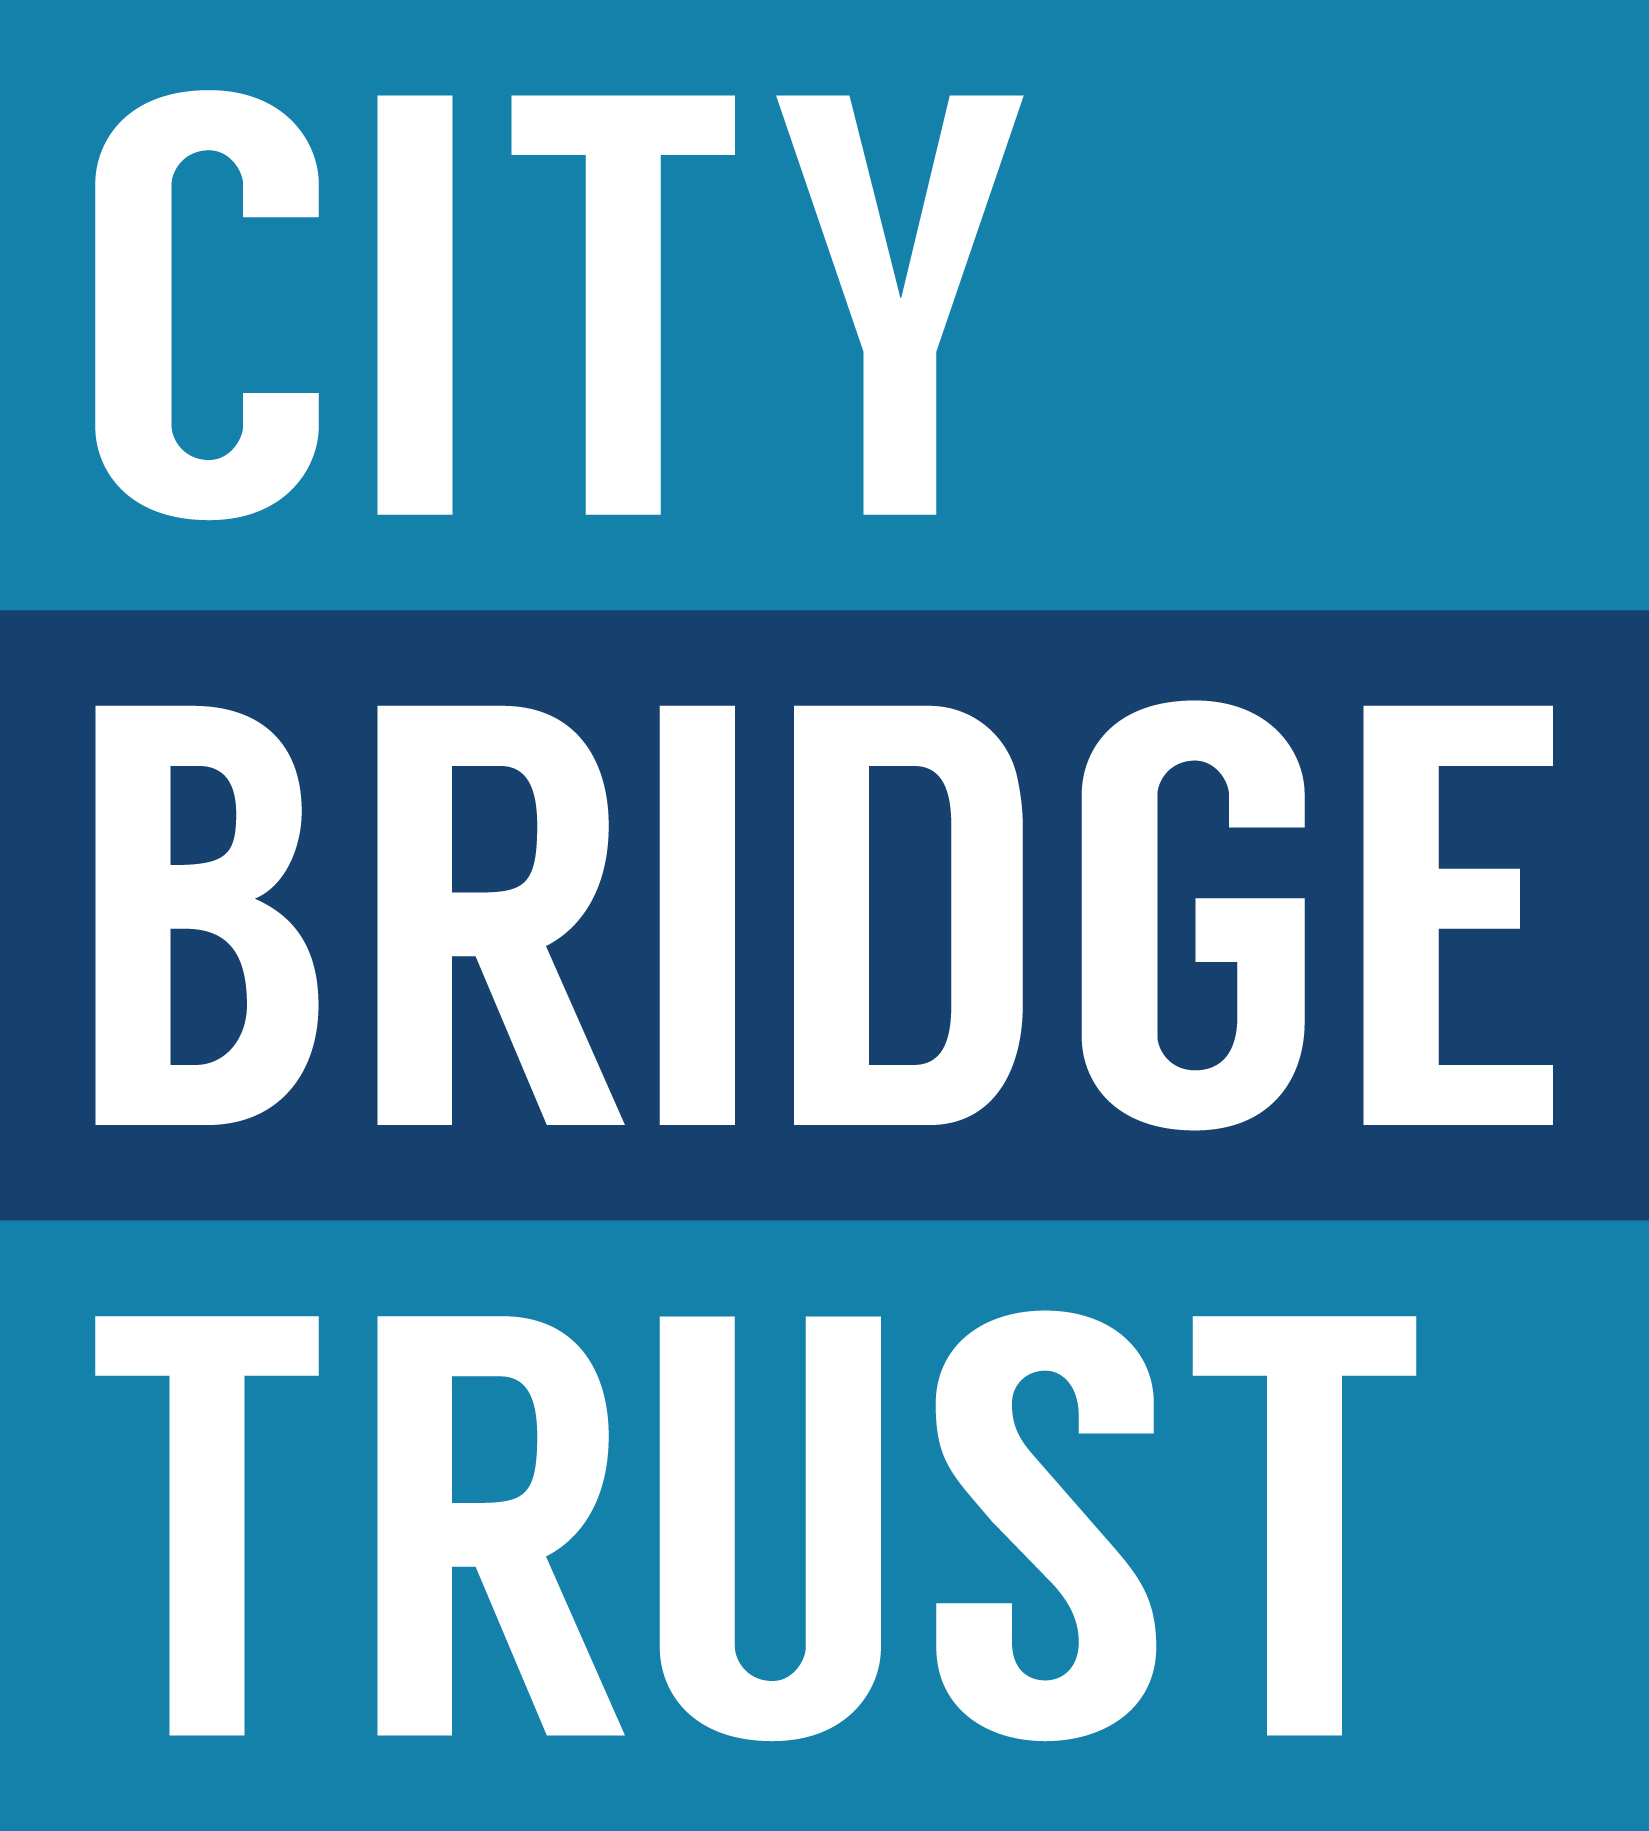 City Bridge Trust logo blue